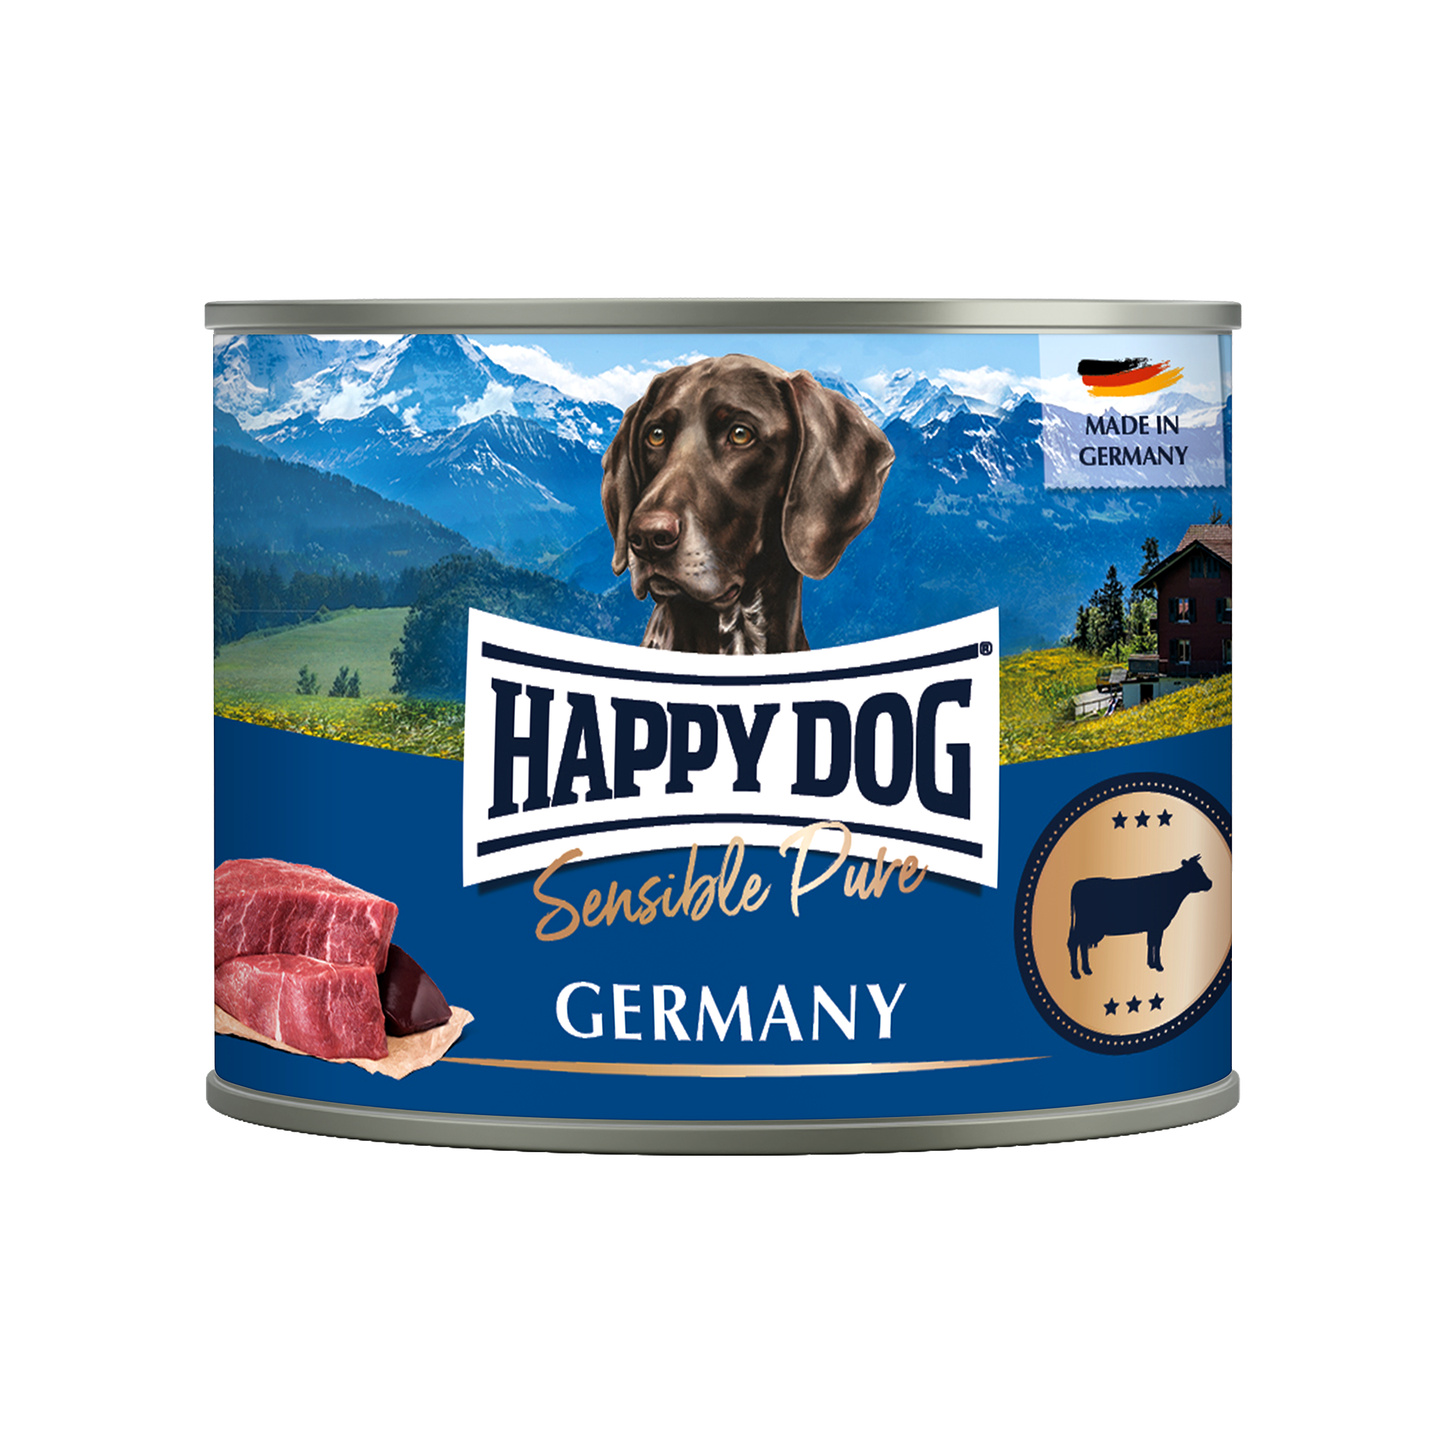 Sensible Beef Pure Germany